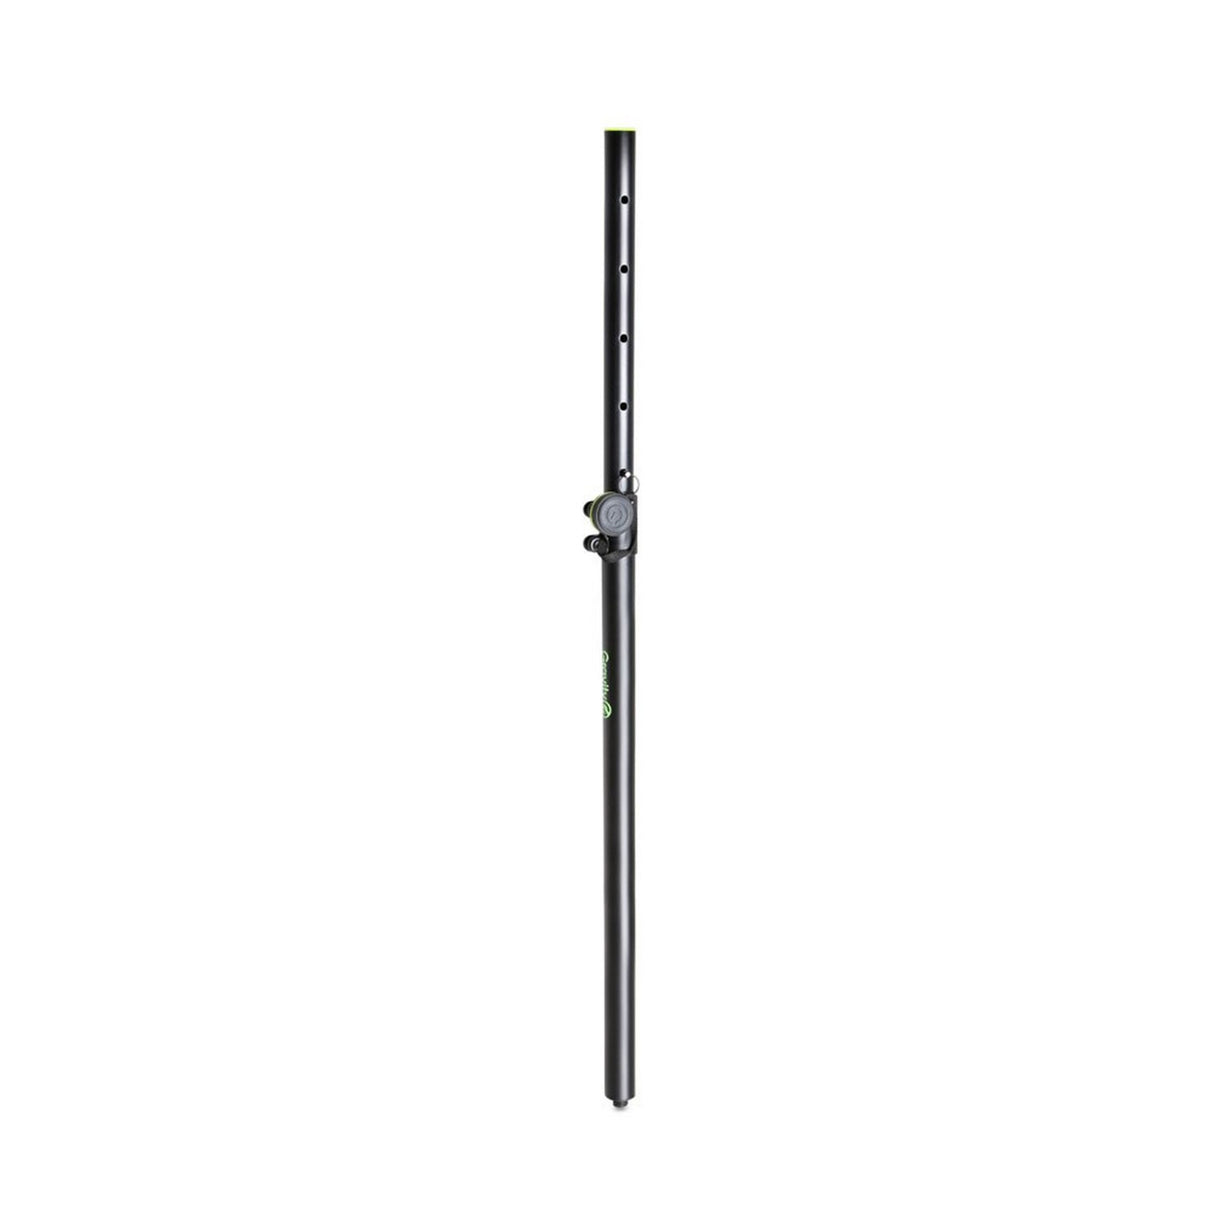 Gravity SP 2332 B Adjustable Speaker Pole 35 mm to M20, 1400 mm